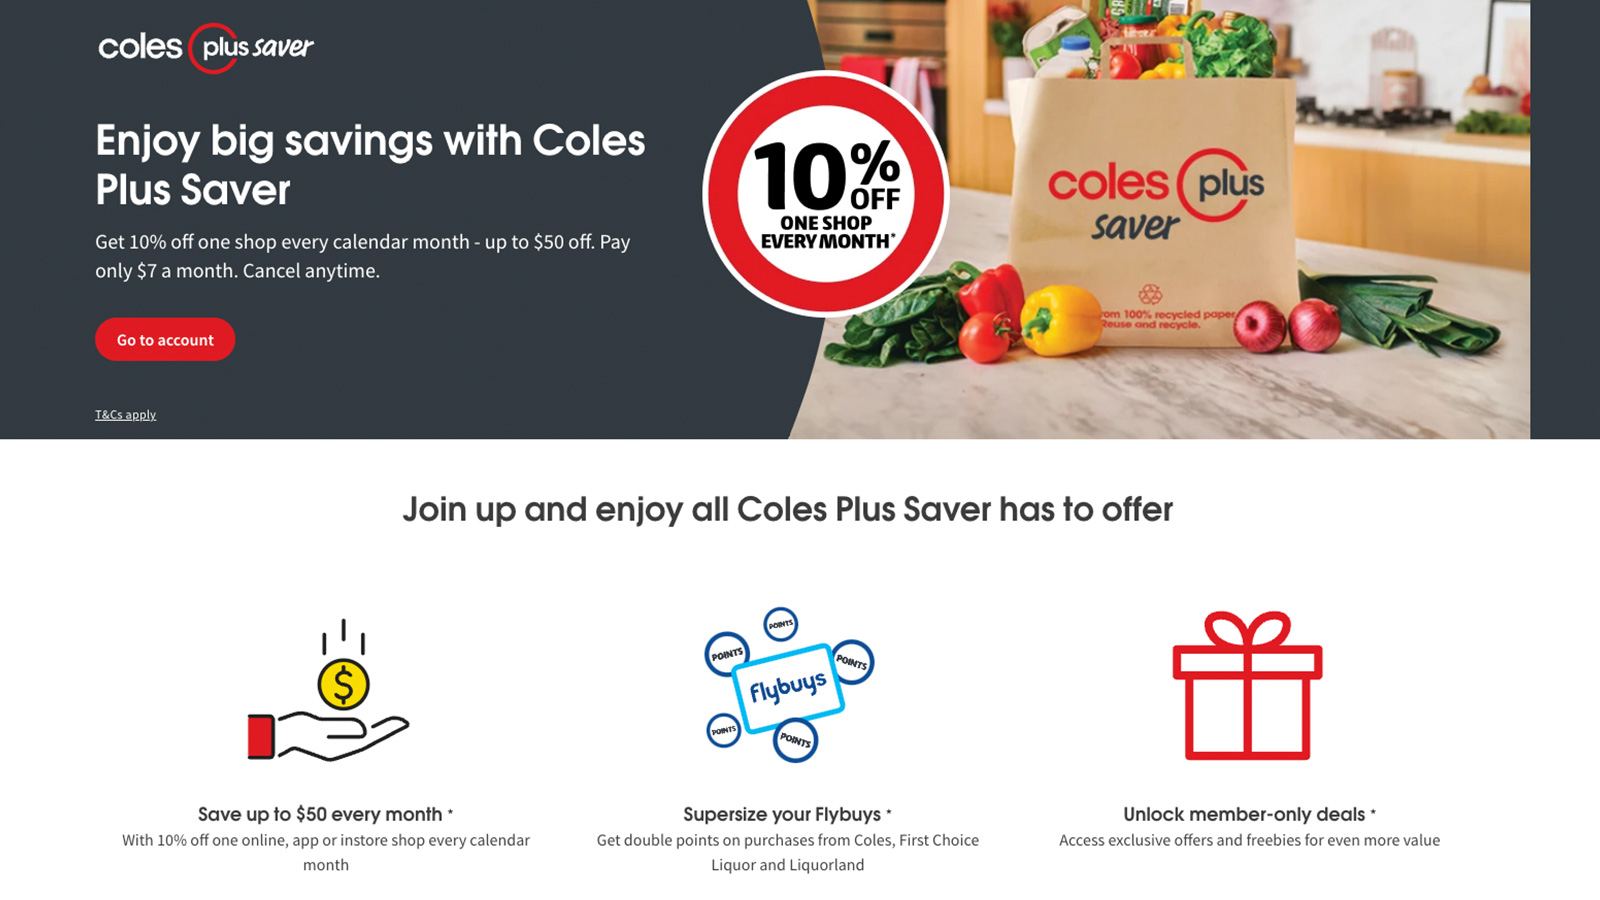 Benefits of Coles Plus Saver subscription